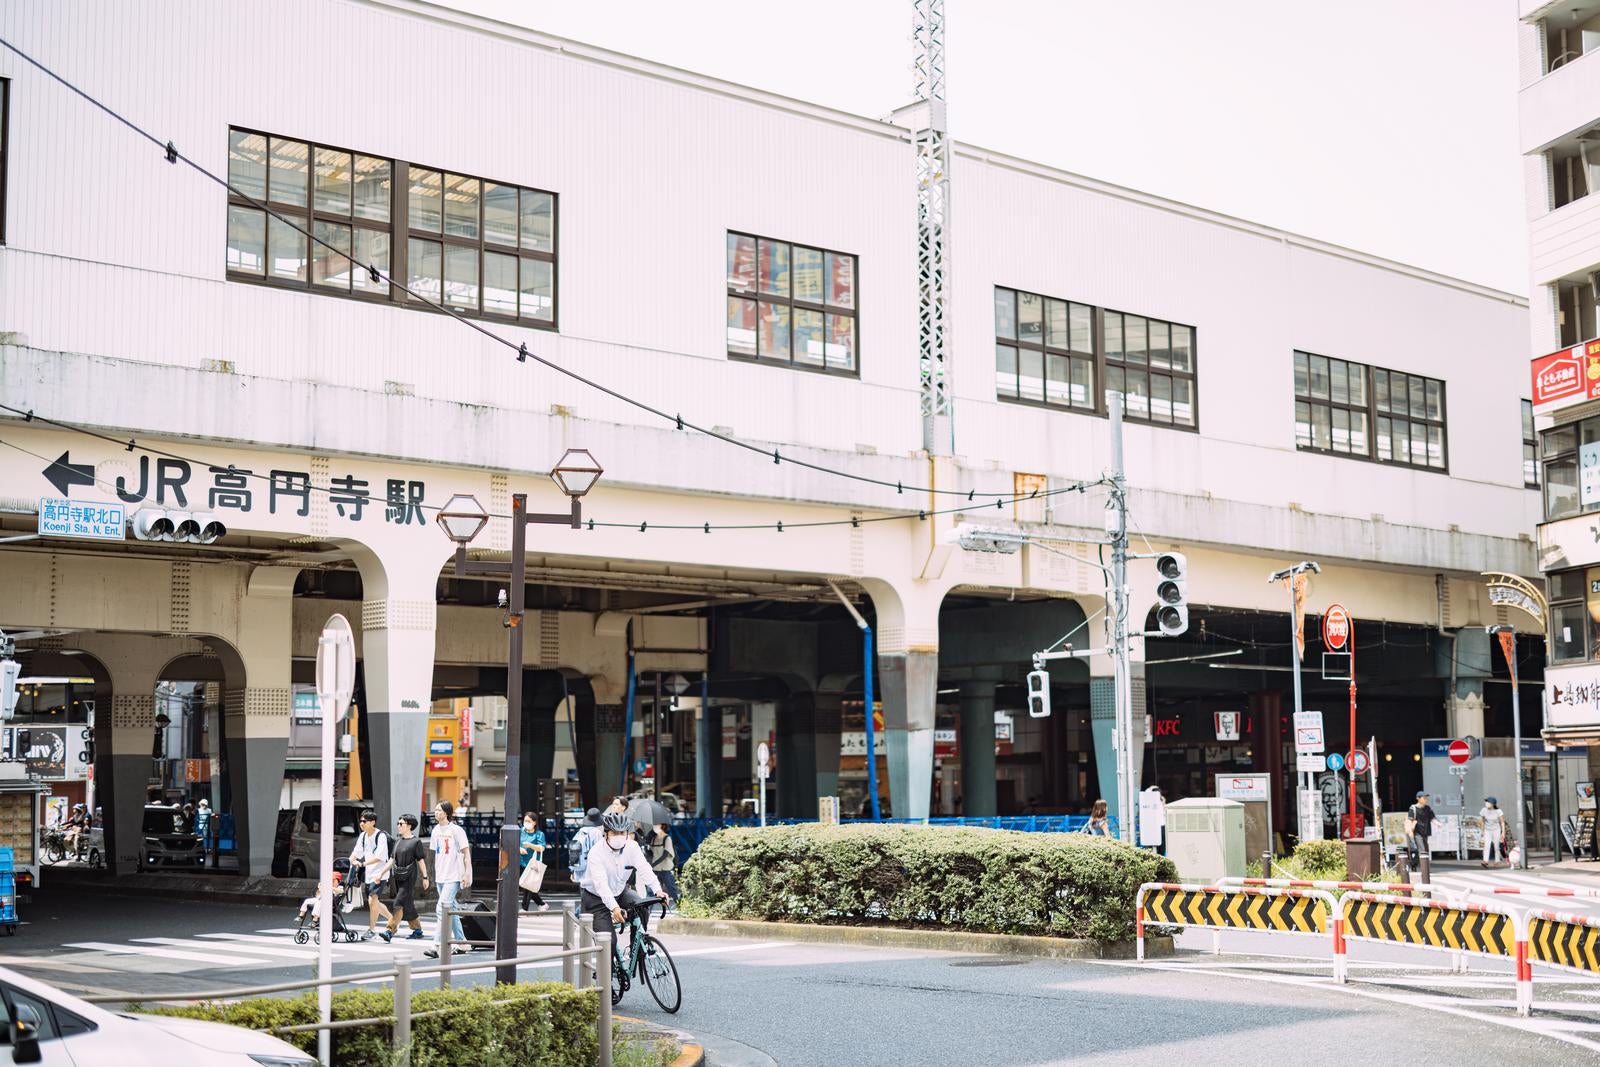 「JR高円寺駅前」の写真